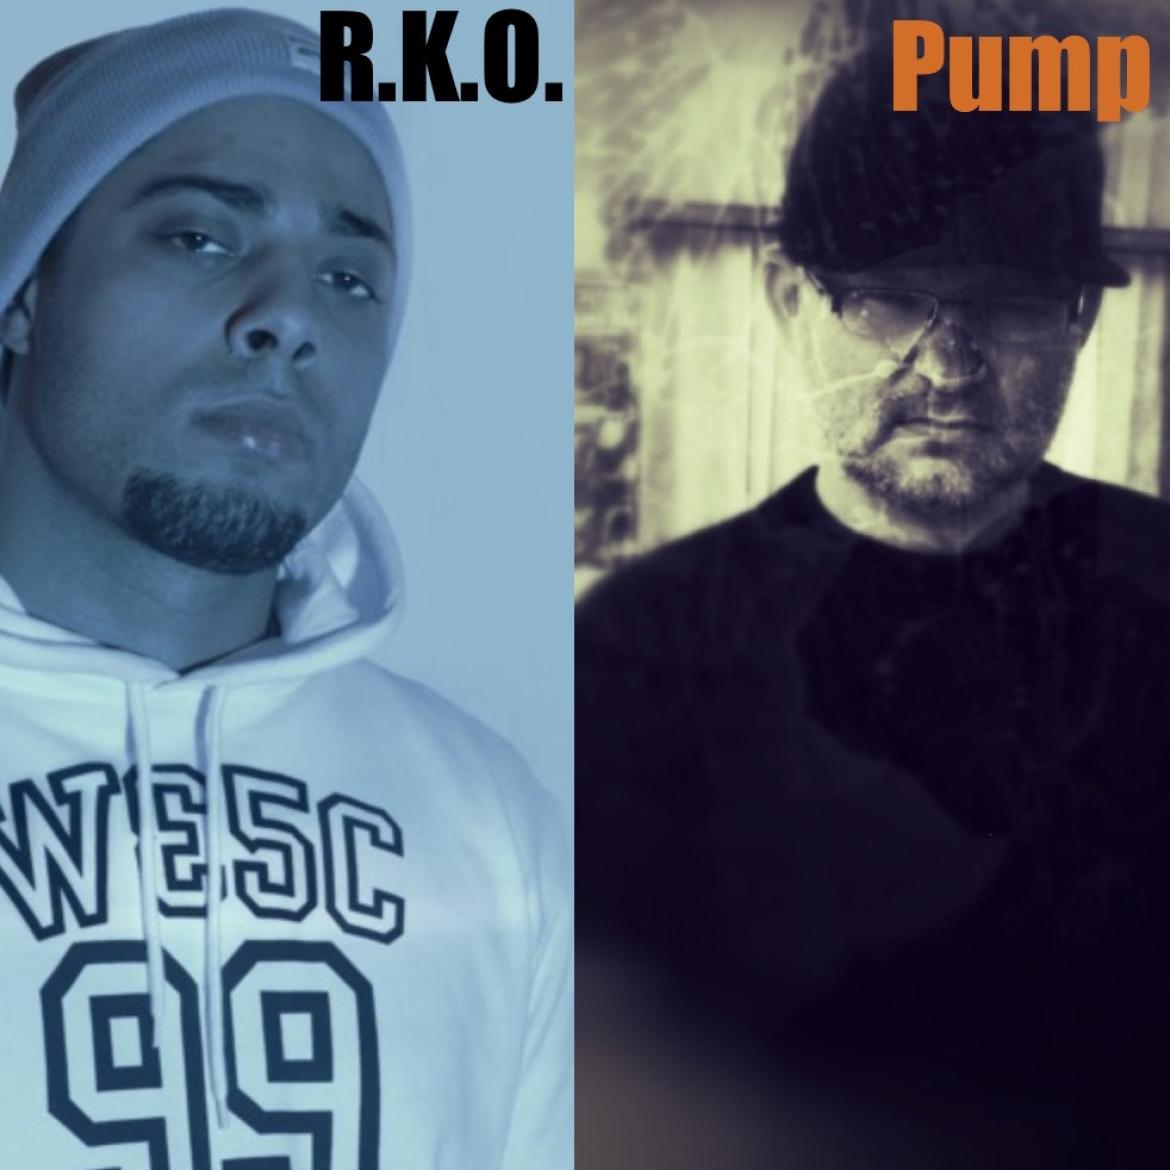 R.K.O. and Pump